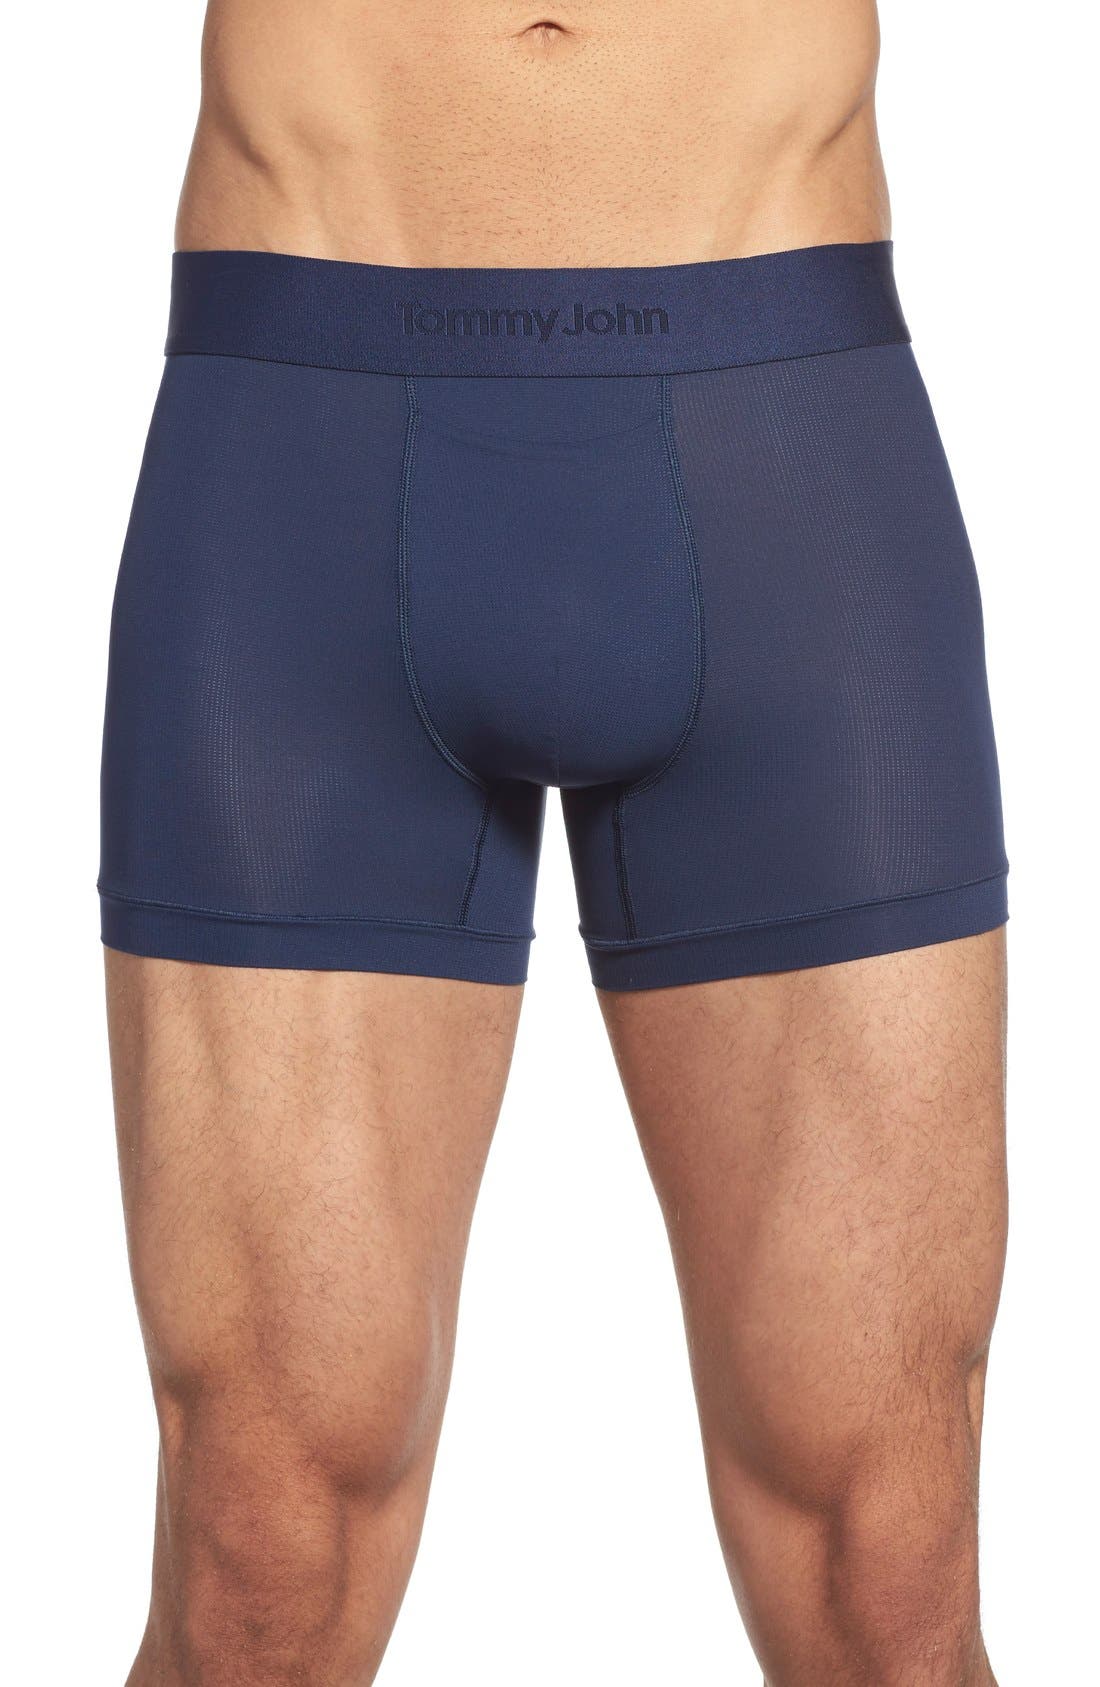 tommy john underwear nordstrom